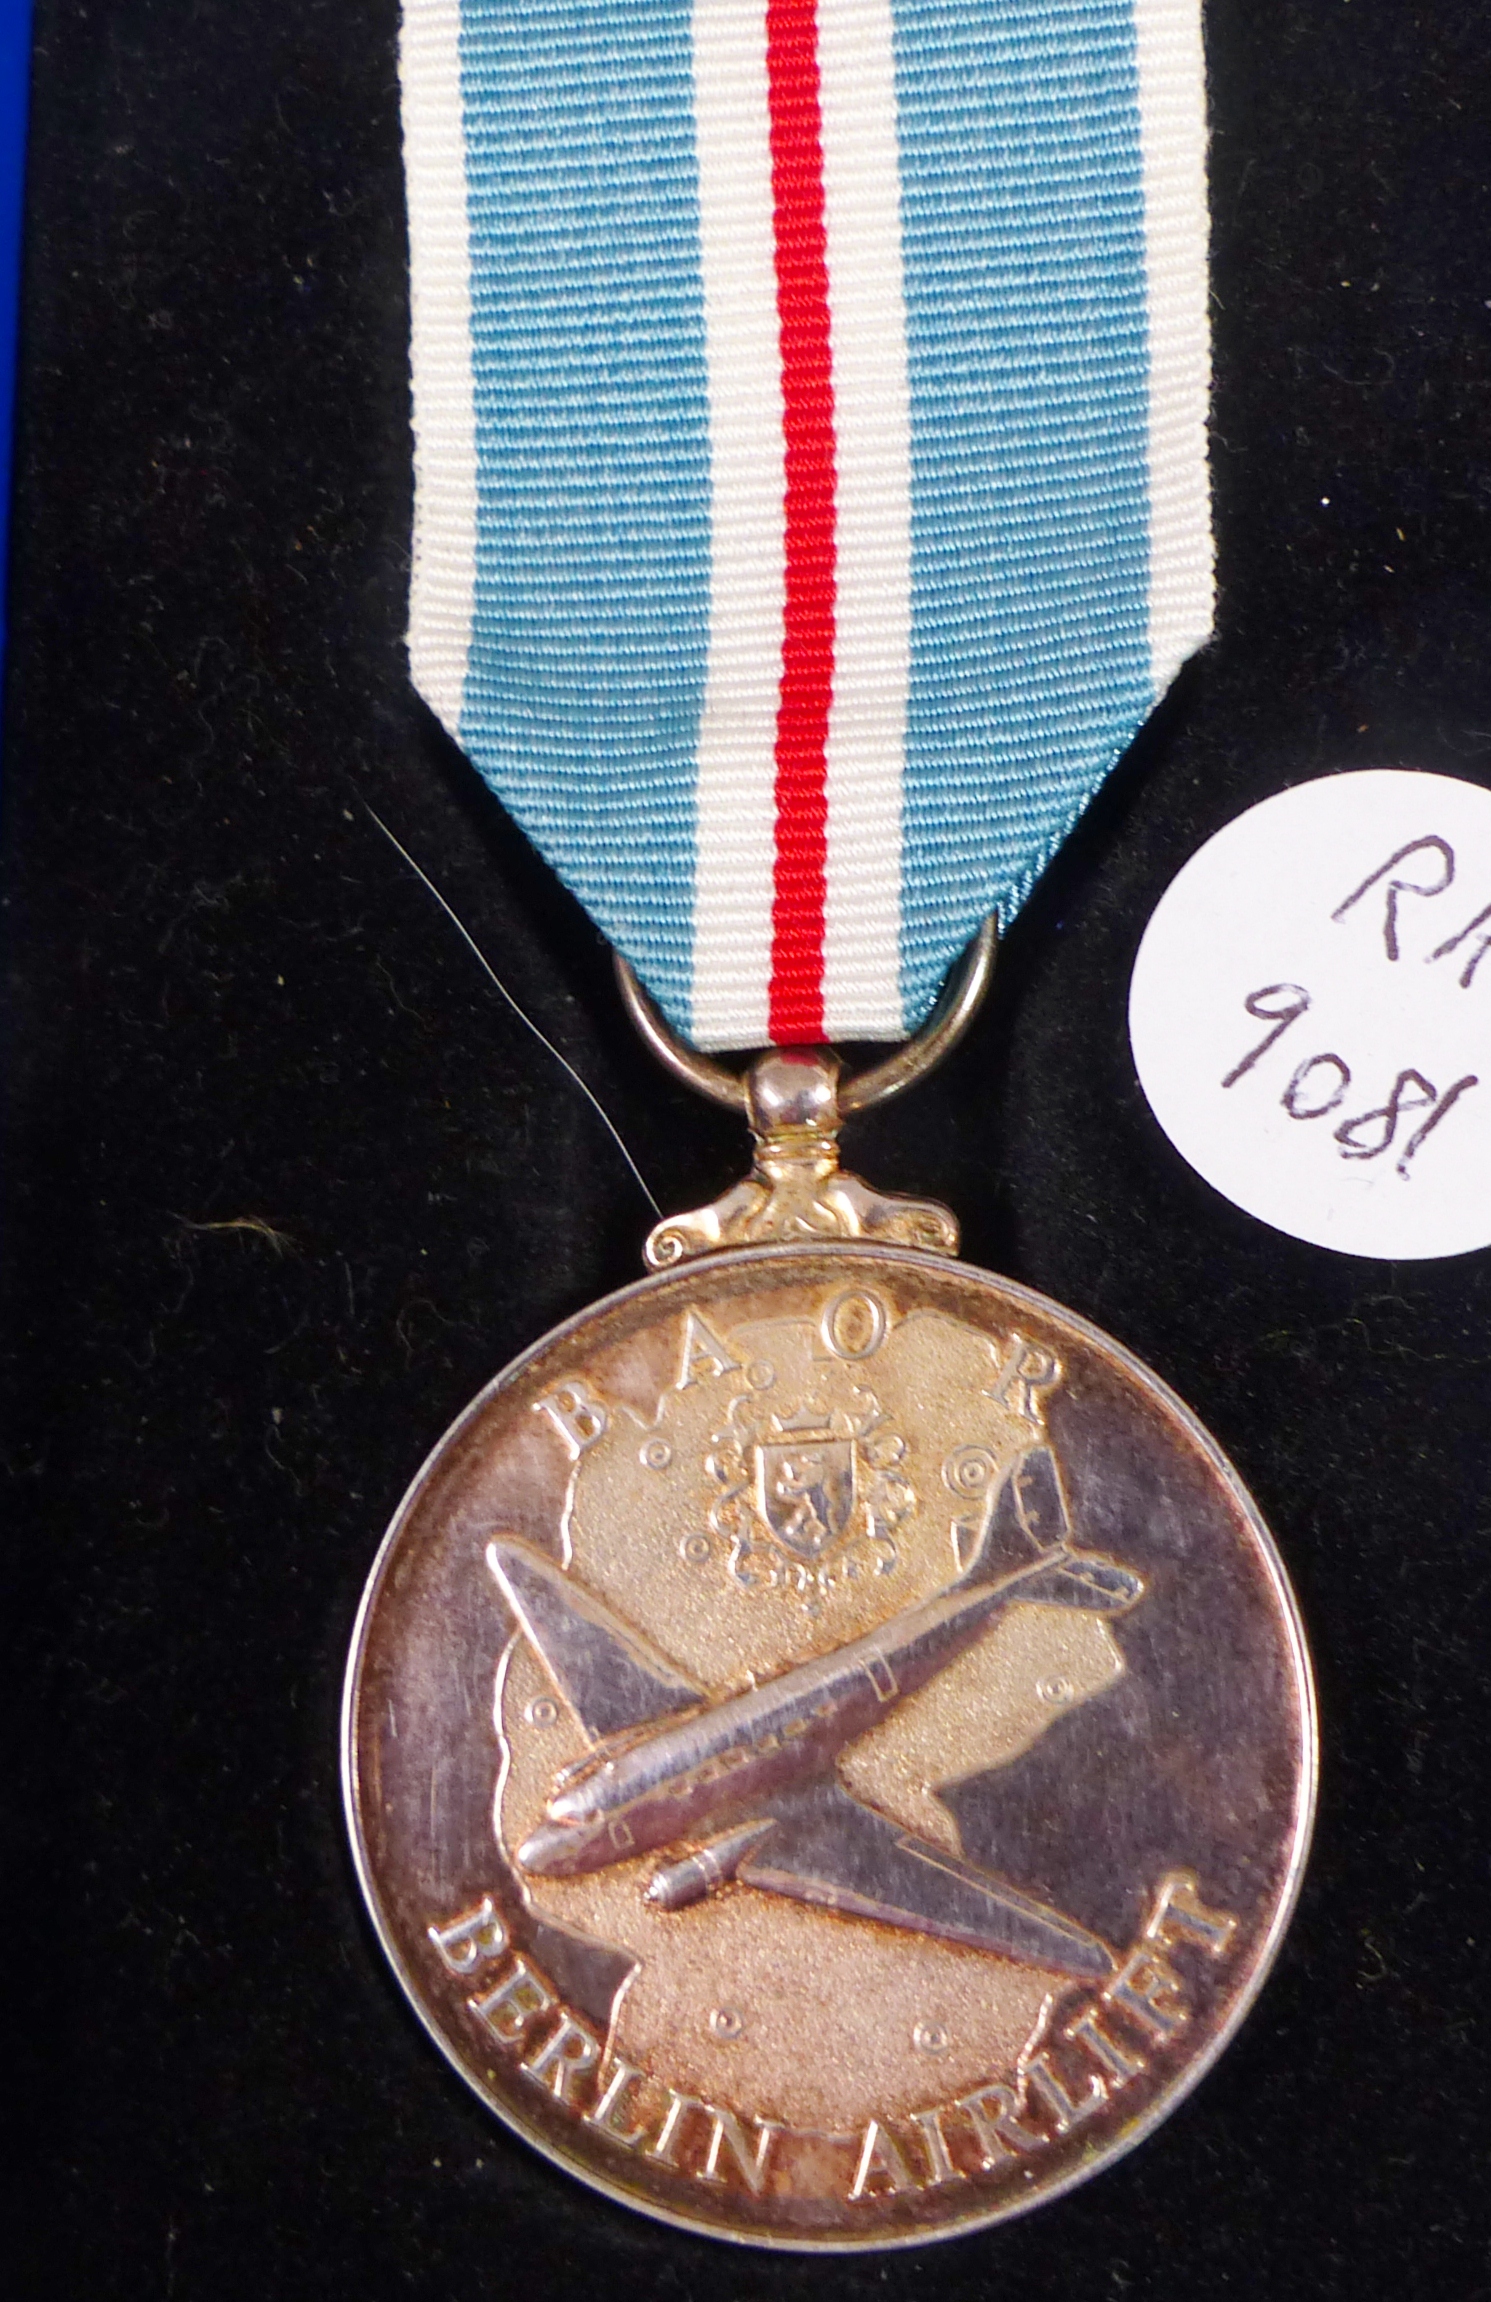 MEDAL. BAOR Berlin Airlift silver medal